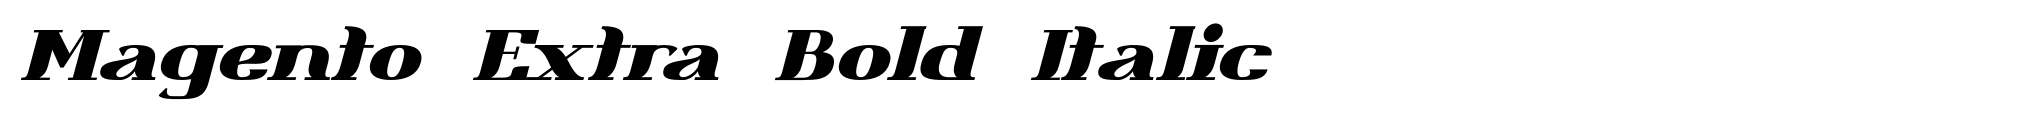 Magento Extra Bold Italic image